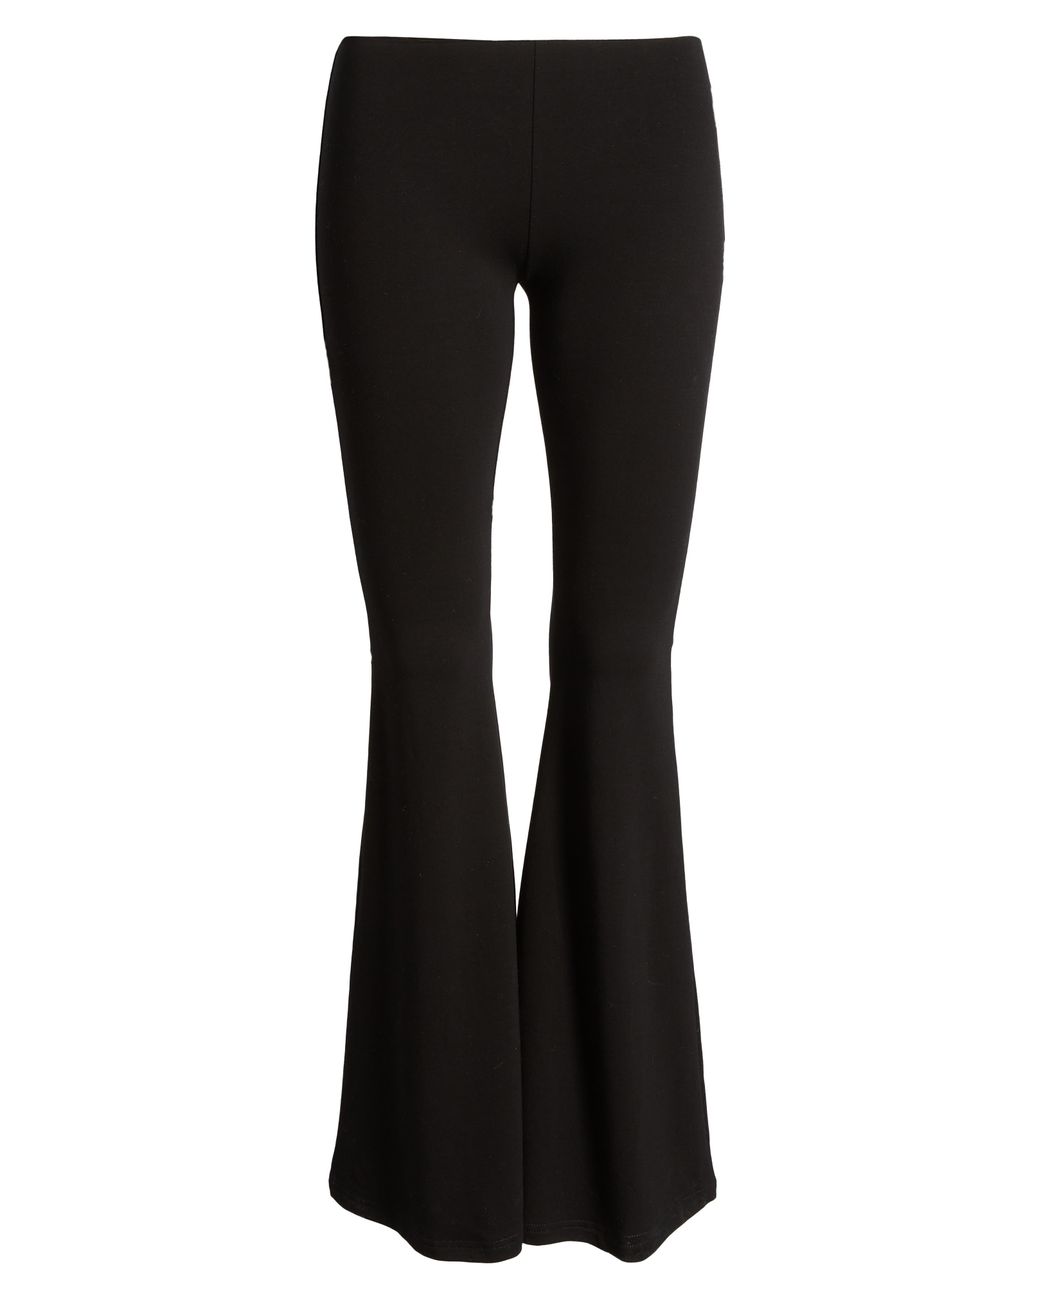 Edikted Foldover Contrast Waist Flare Stretch Cotton leggings in Black